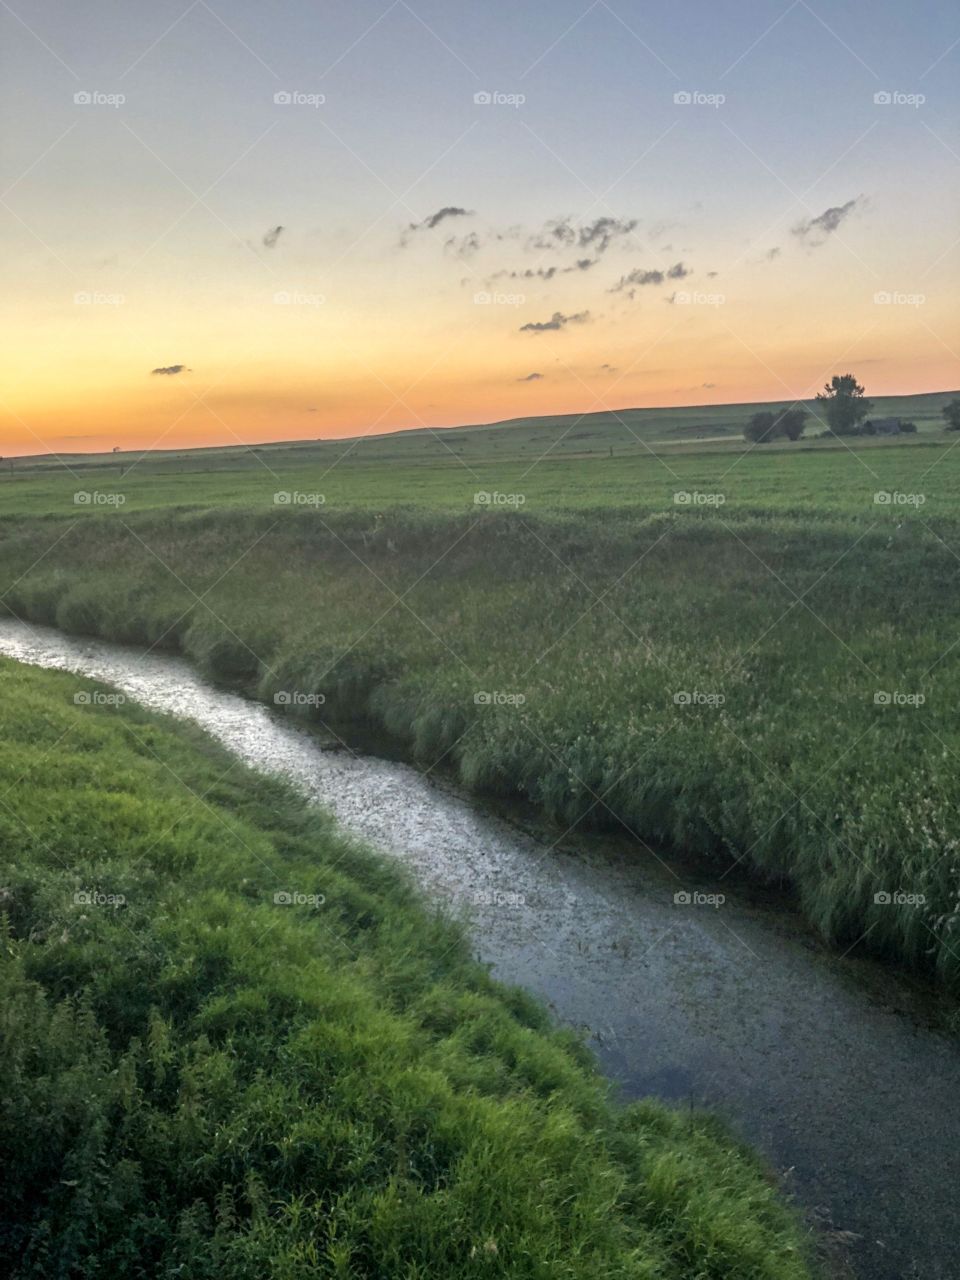 North Dakota sunsets never disappoint. Beautiful fields of wheat waving in the North Dakota wind